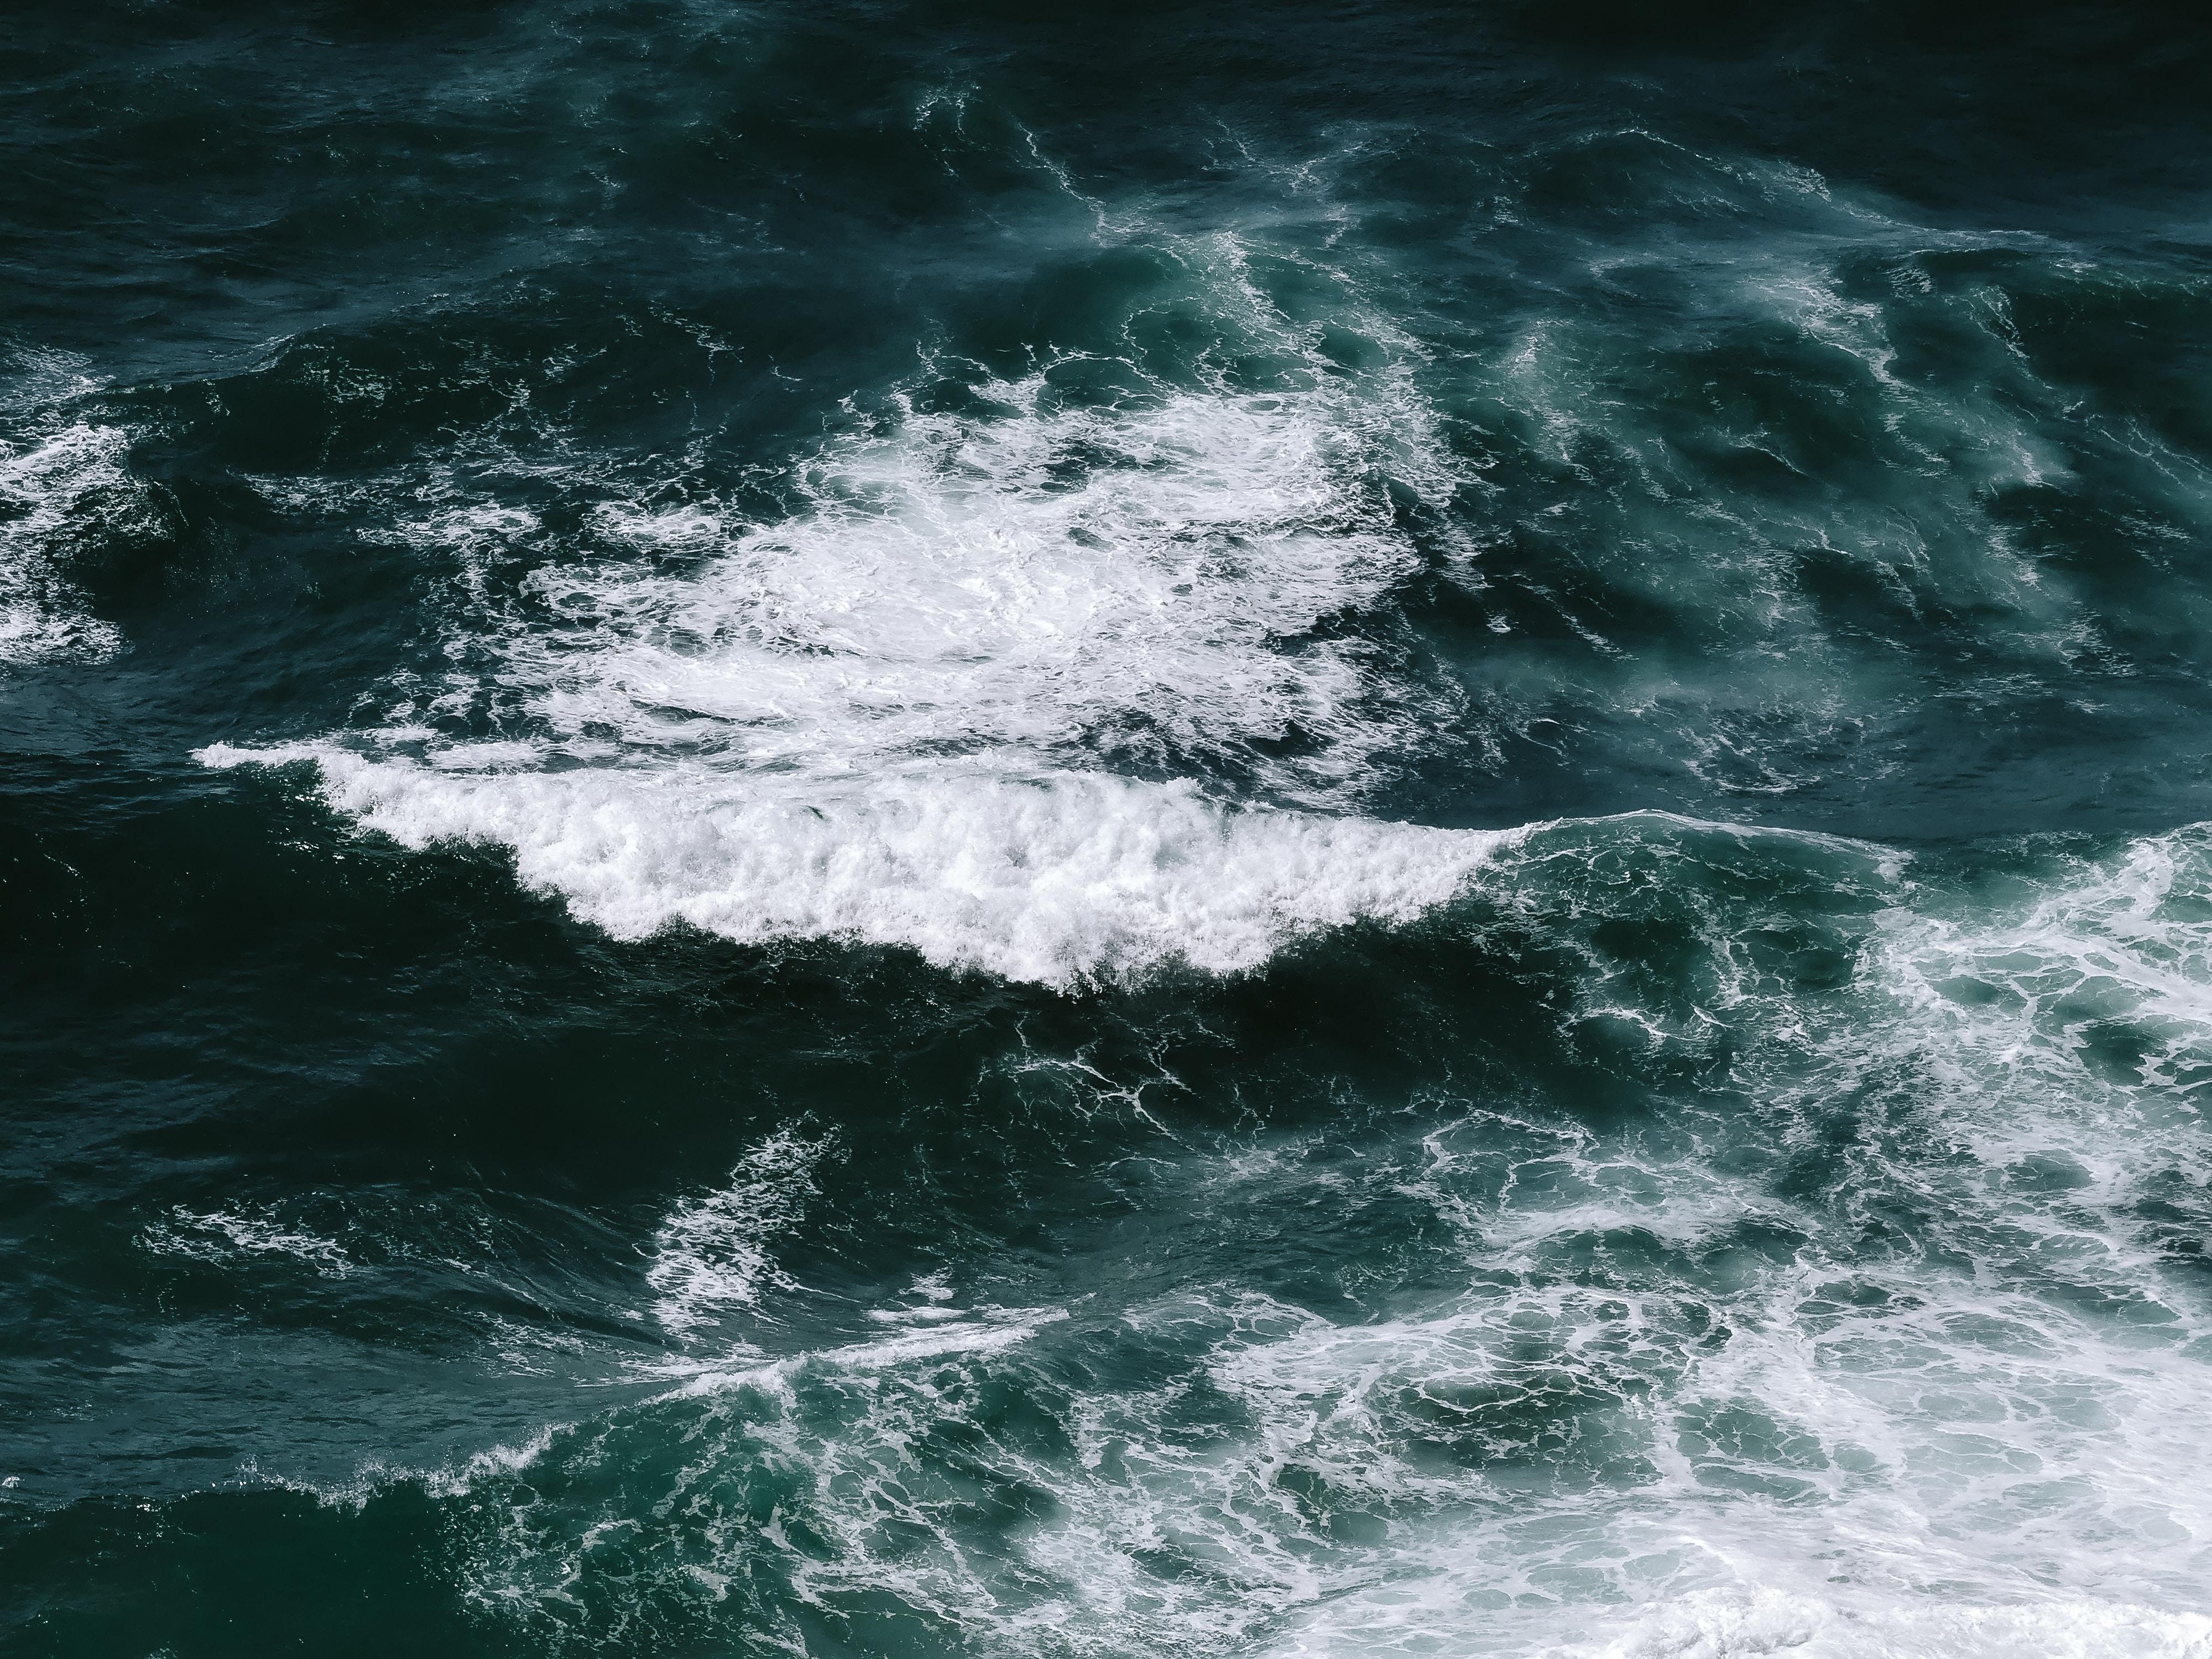 4000x3000 #tide, #background, #ocean, #emerald, #waves, #current, # water, #rough, #contrast, #violent, #wallpaper, #green, #wave, #stormy, #inspiring, #surf, #Free picture, #desktop, #dark, #impressive, #sea. Mocah HD Wallpaper